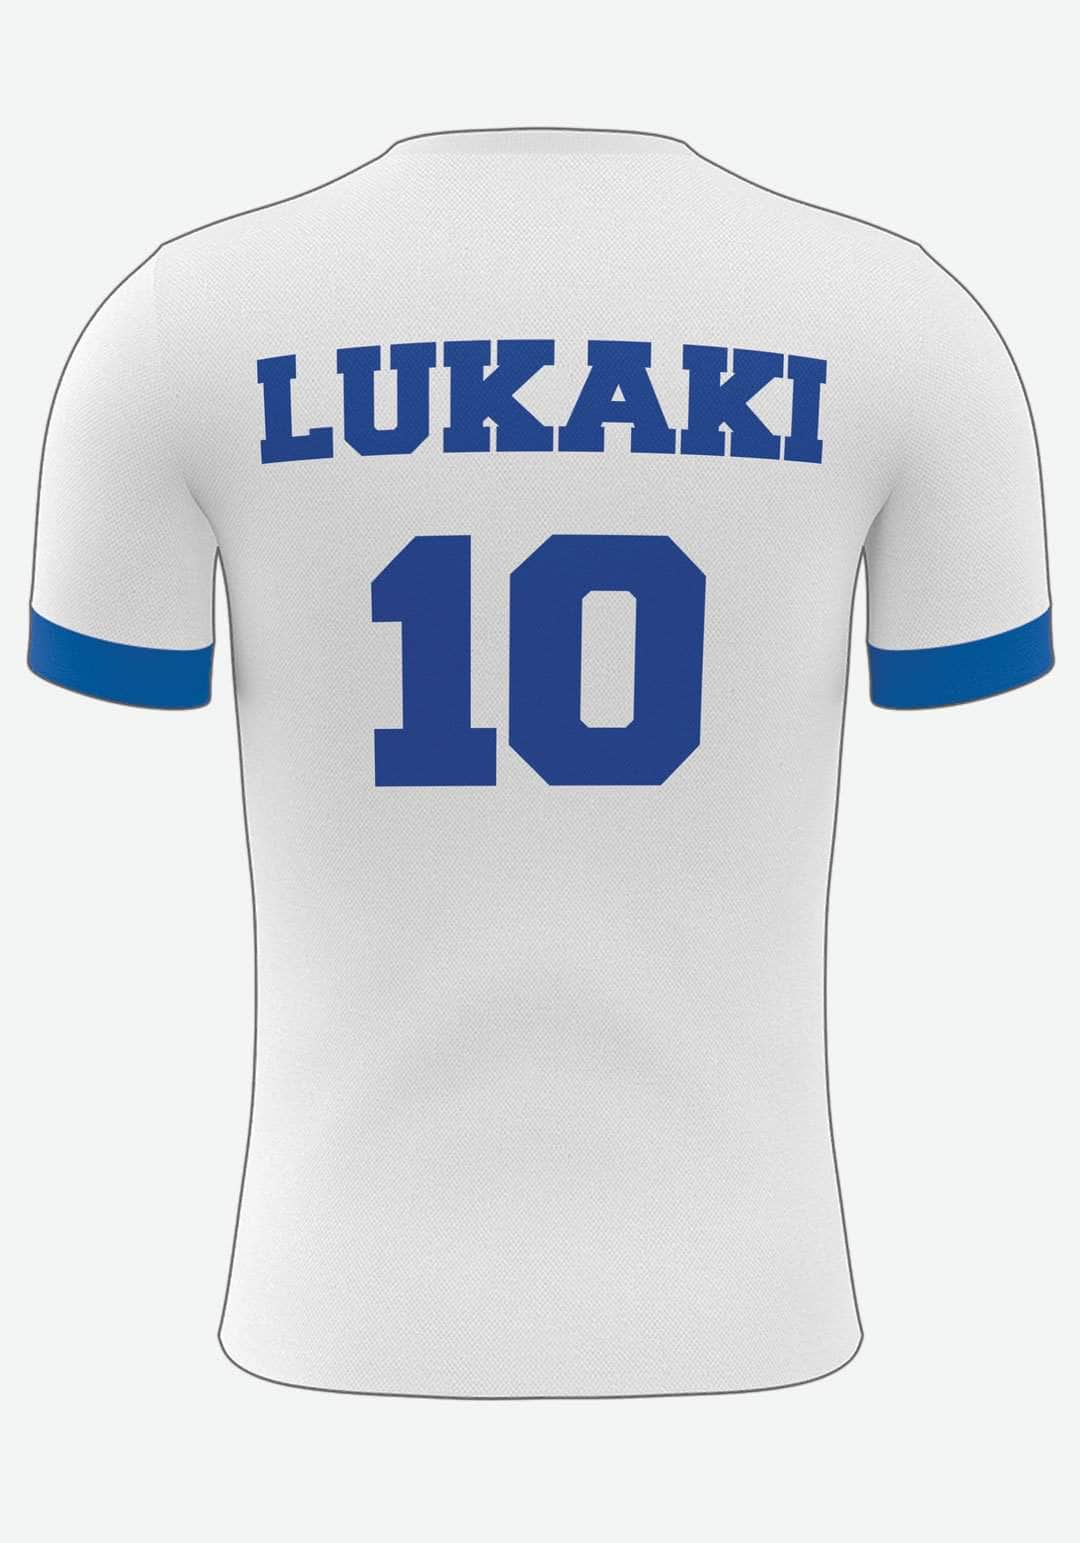 Se Madrid Fodbold plakat - med eget navn og nummer, 21x30 hos Lukaki.dk